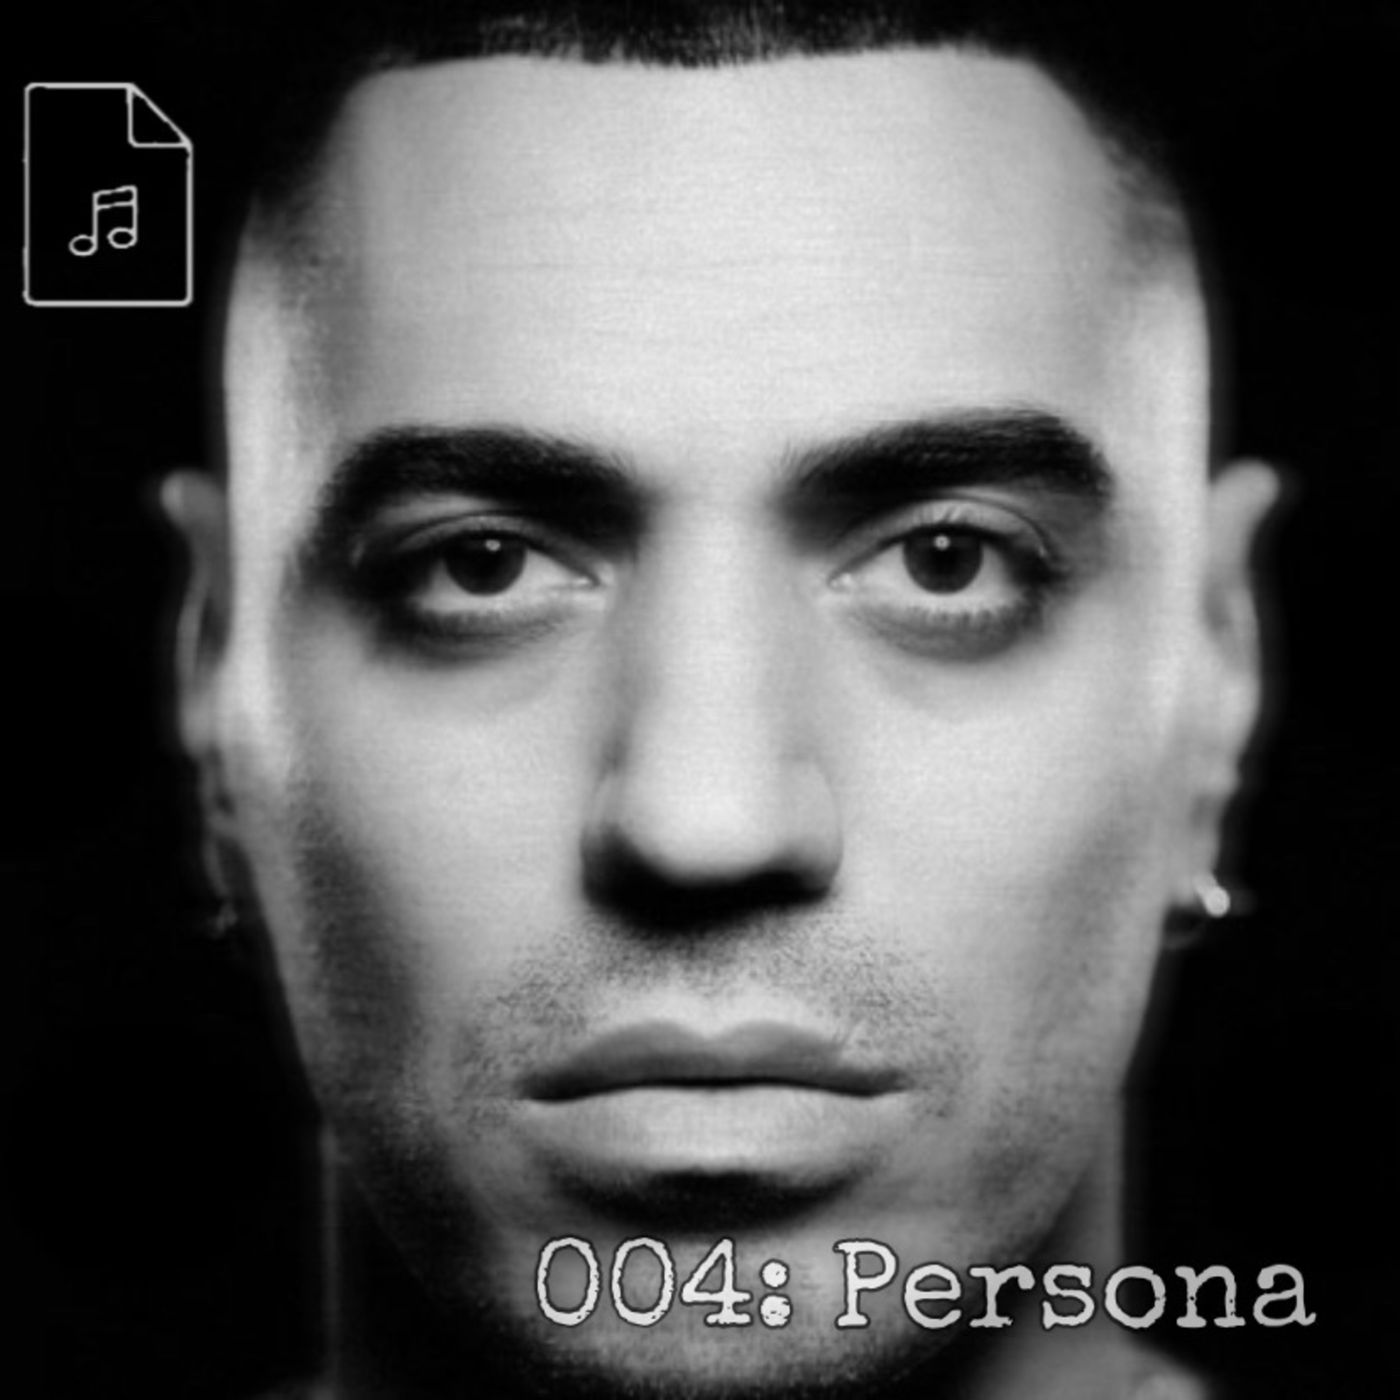 004: Persona by Marracash